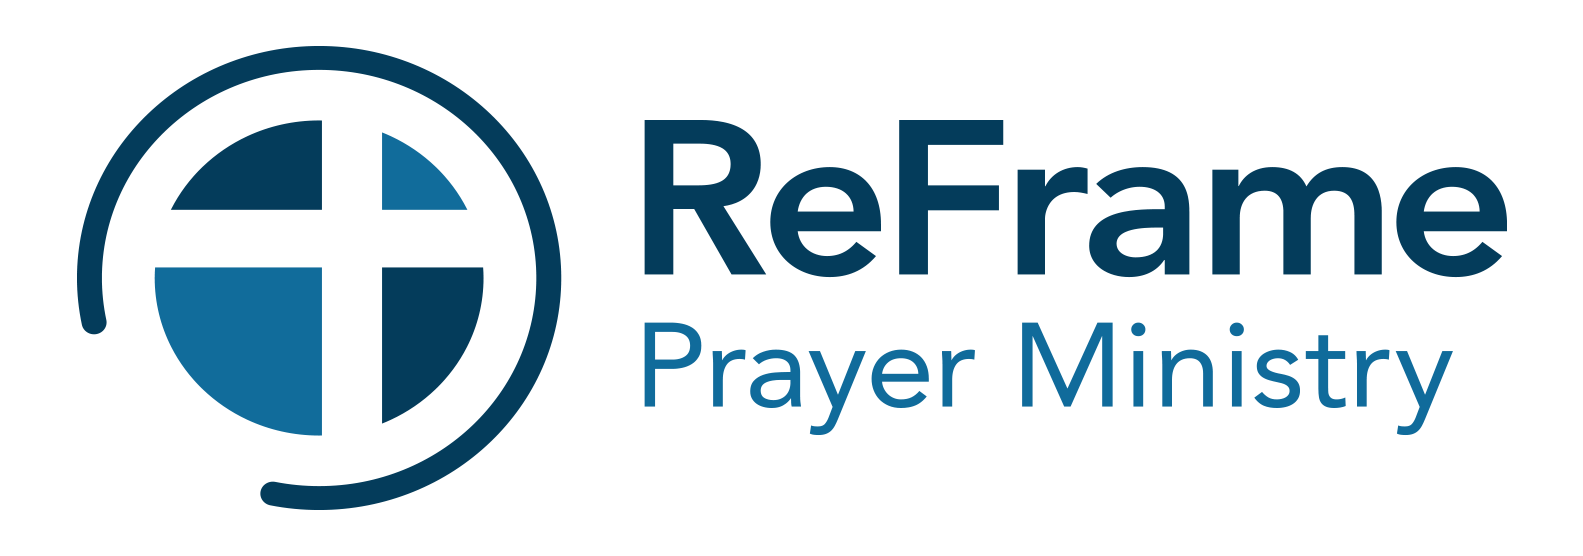 reframe-prayer-ministry-logo